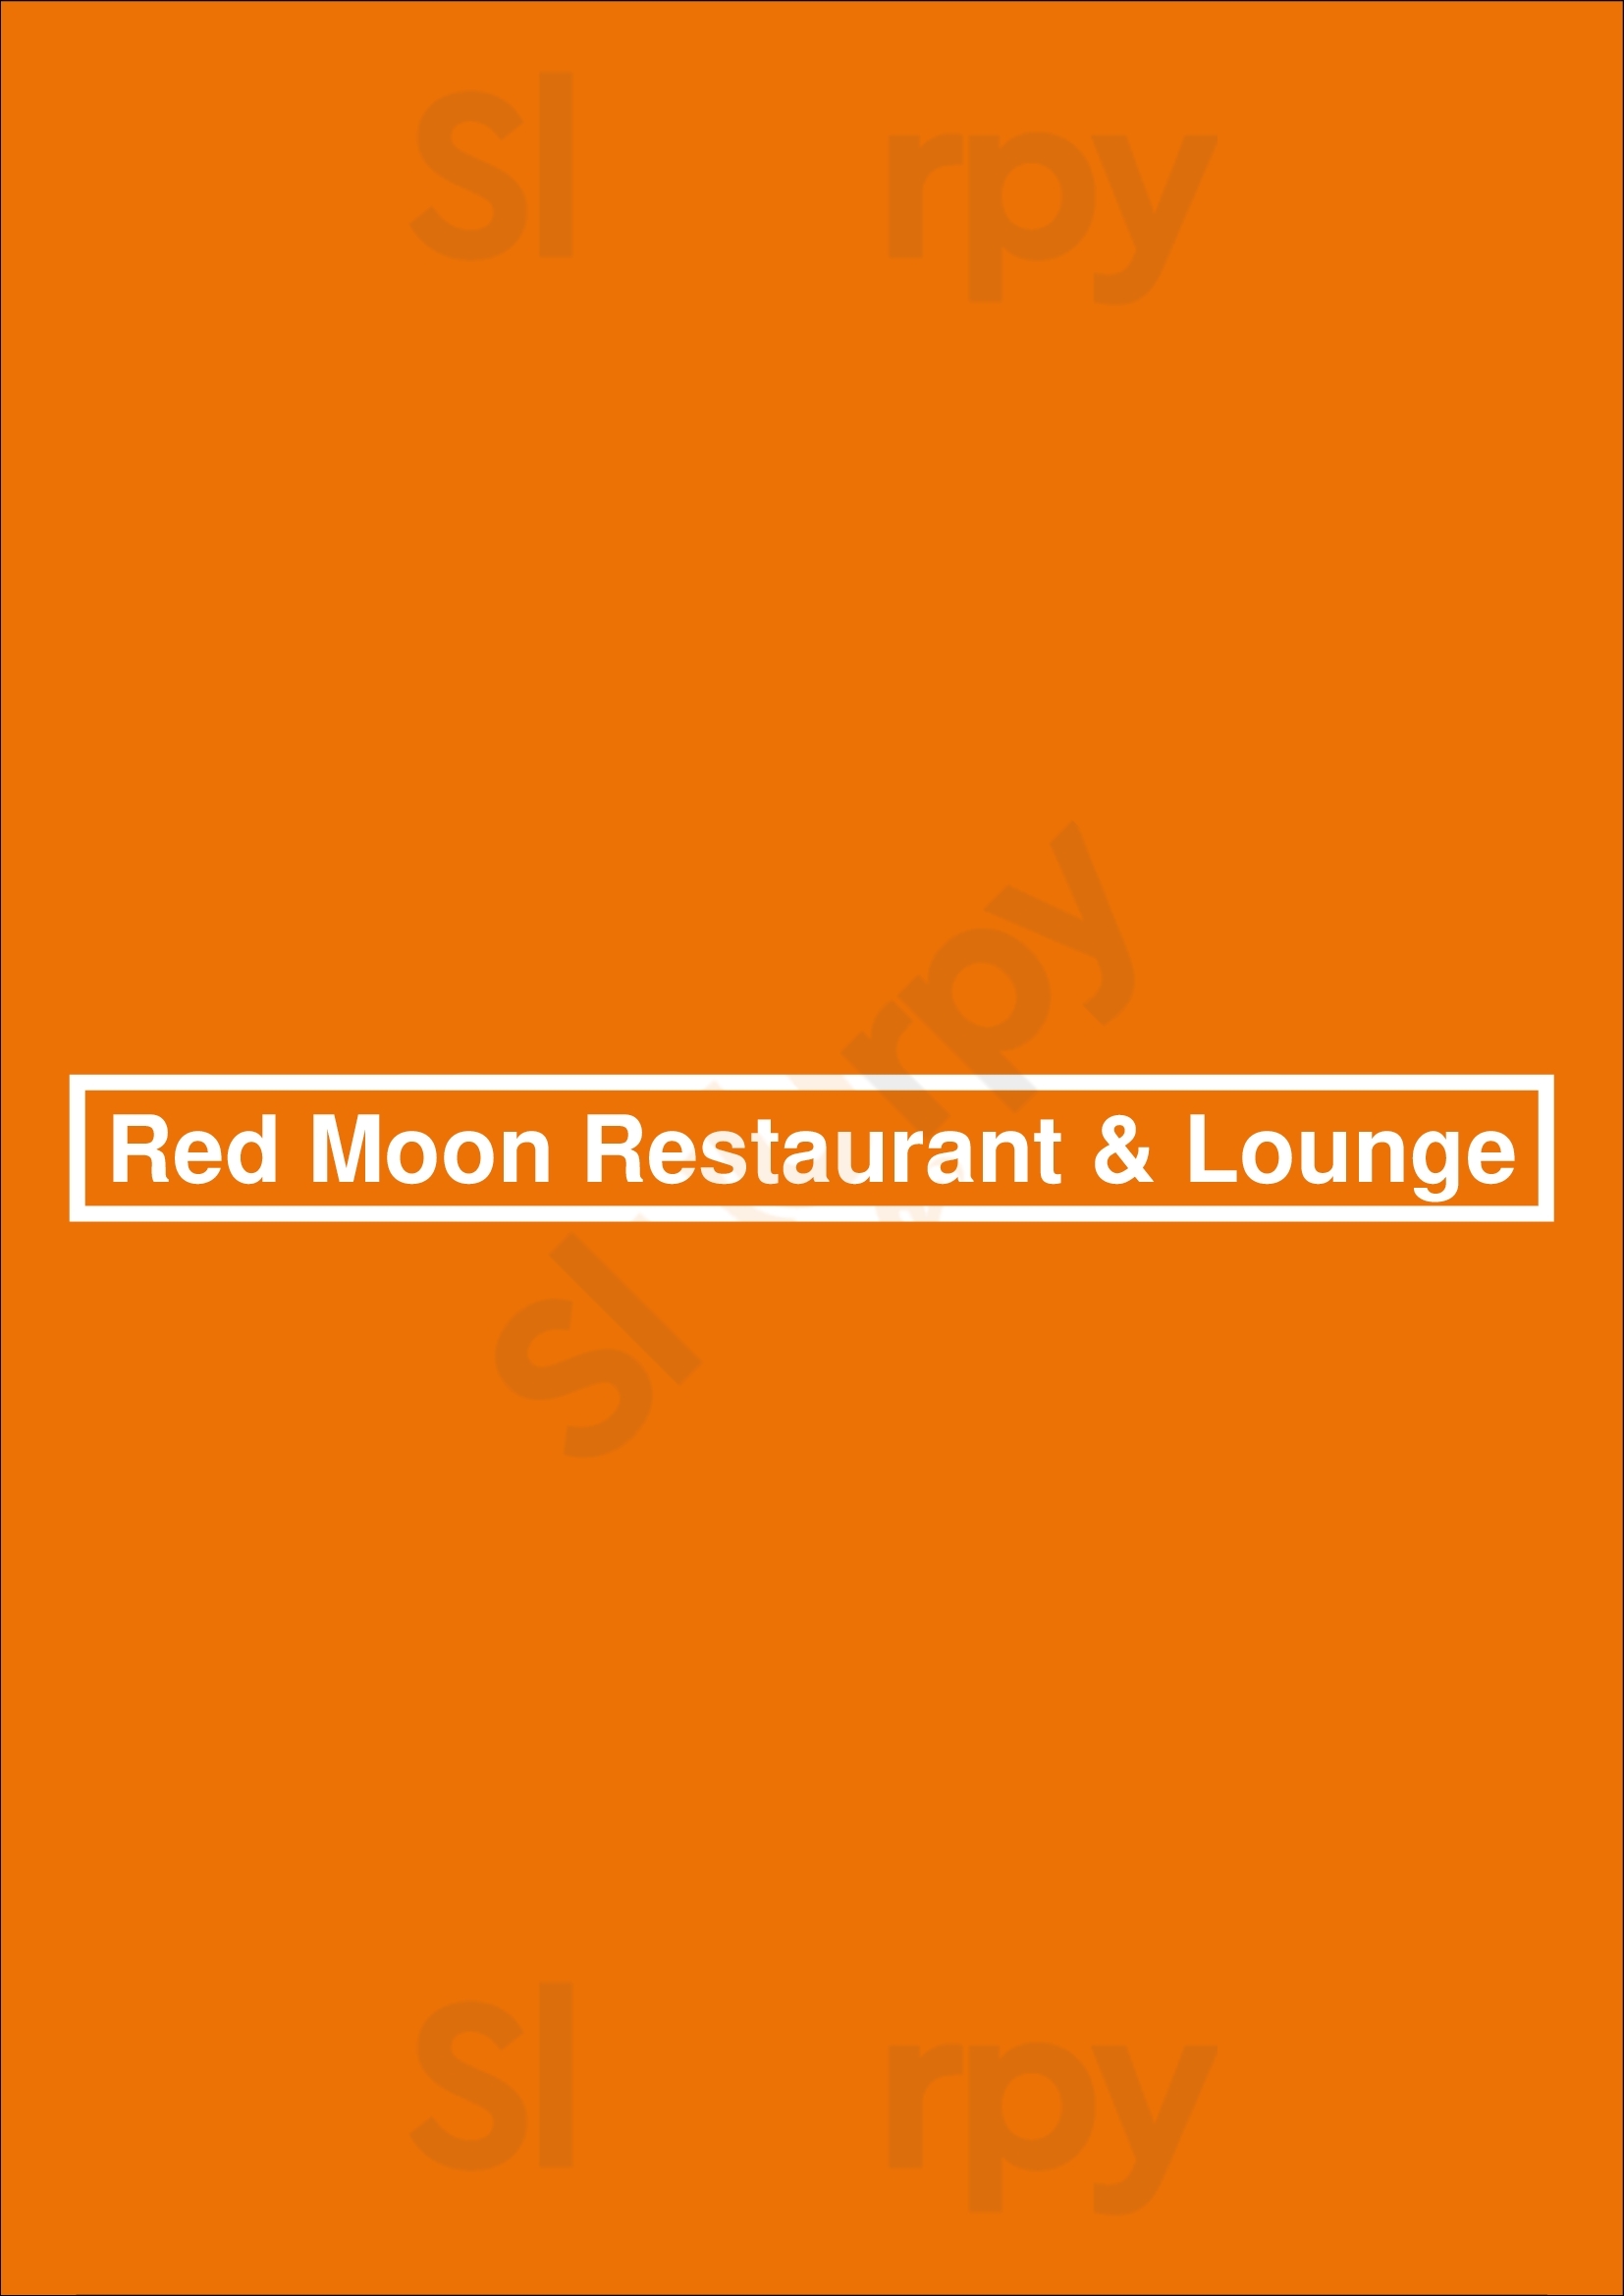 Red Moon Restaurant & Lounge Los Angeles Menu - 1